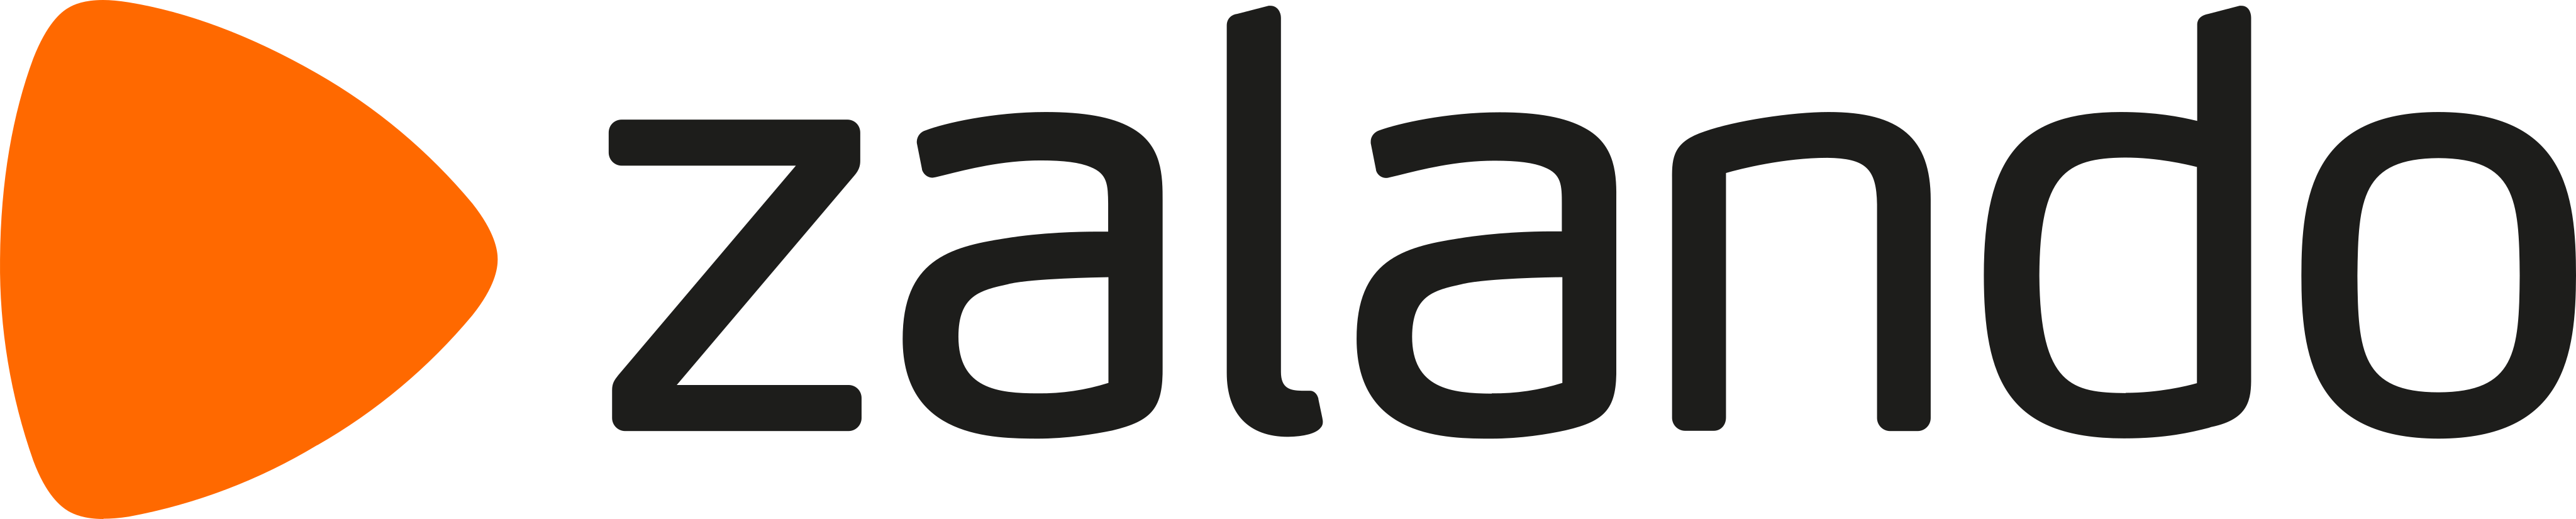 zalando logo - Zalando Logo